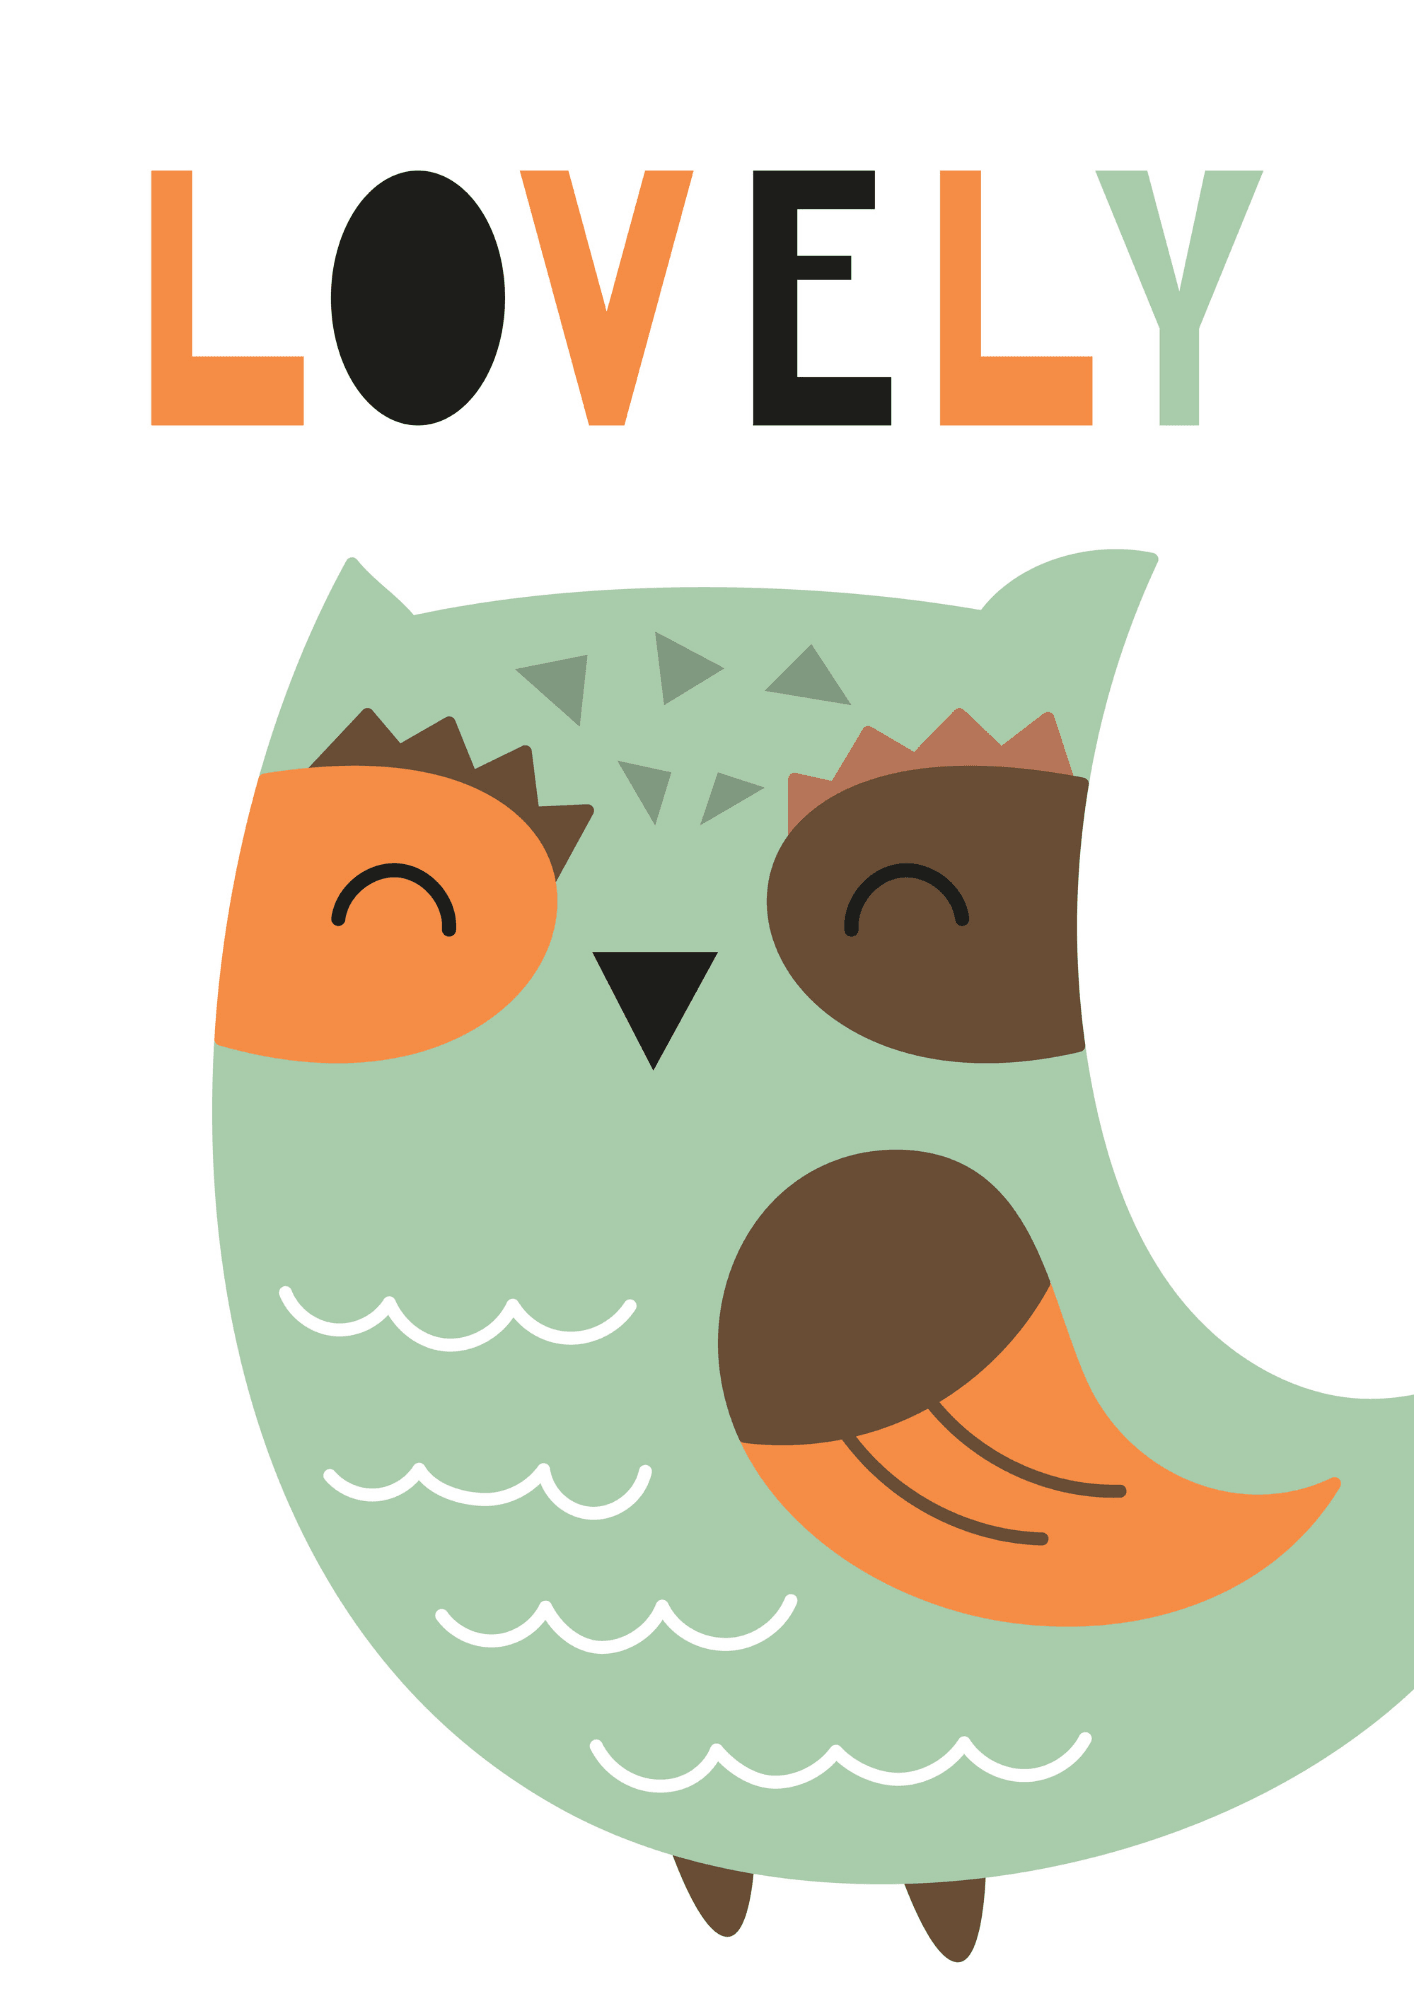 Lovely Owl - The Ditzy Dodo